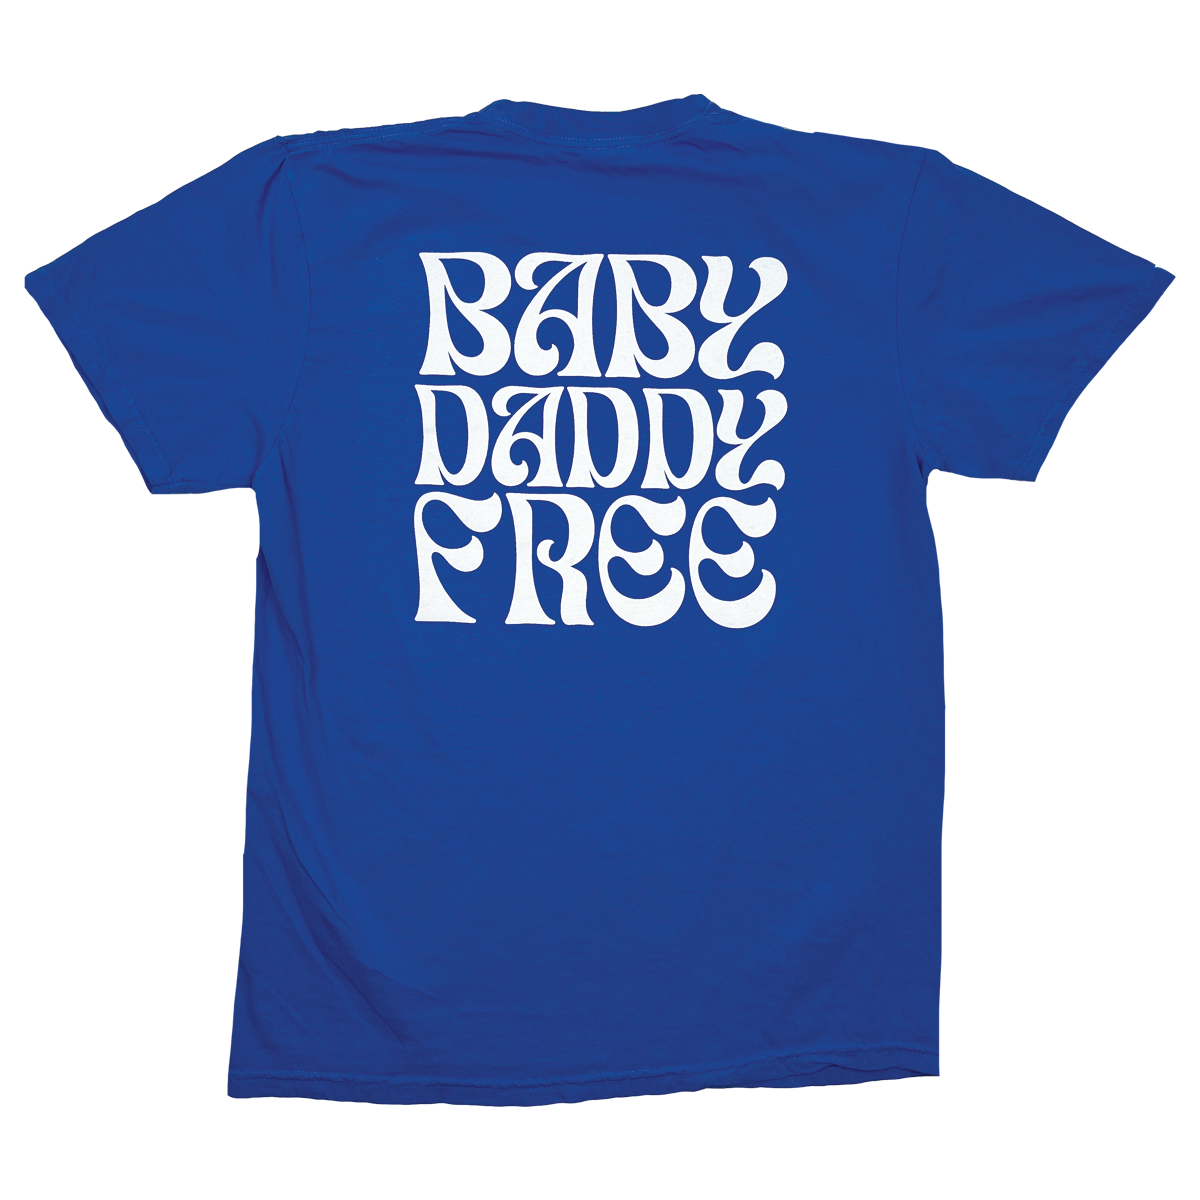 BABY DADDY FREE T-SHIRT